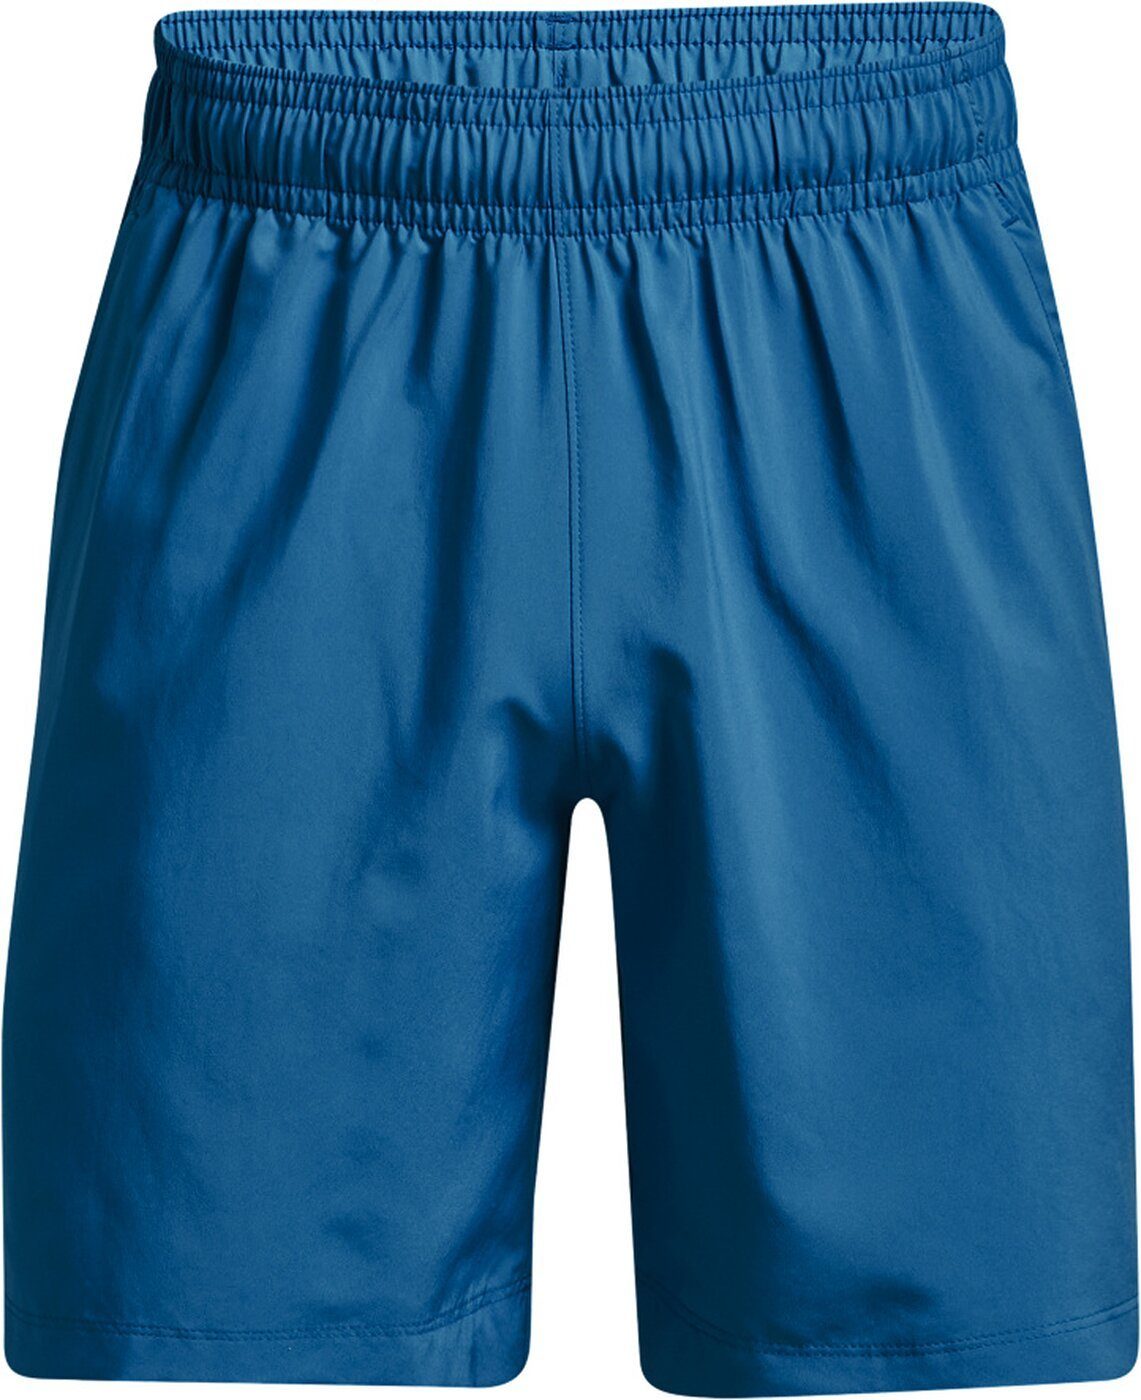 Under Armour® Shorts UA WOVEN GRAPHIC SHORTS 899 899 CRUISE BLUE